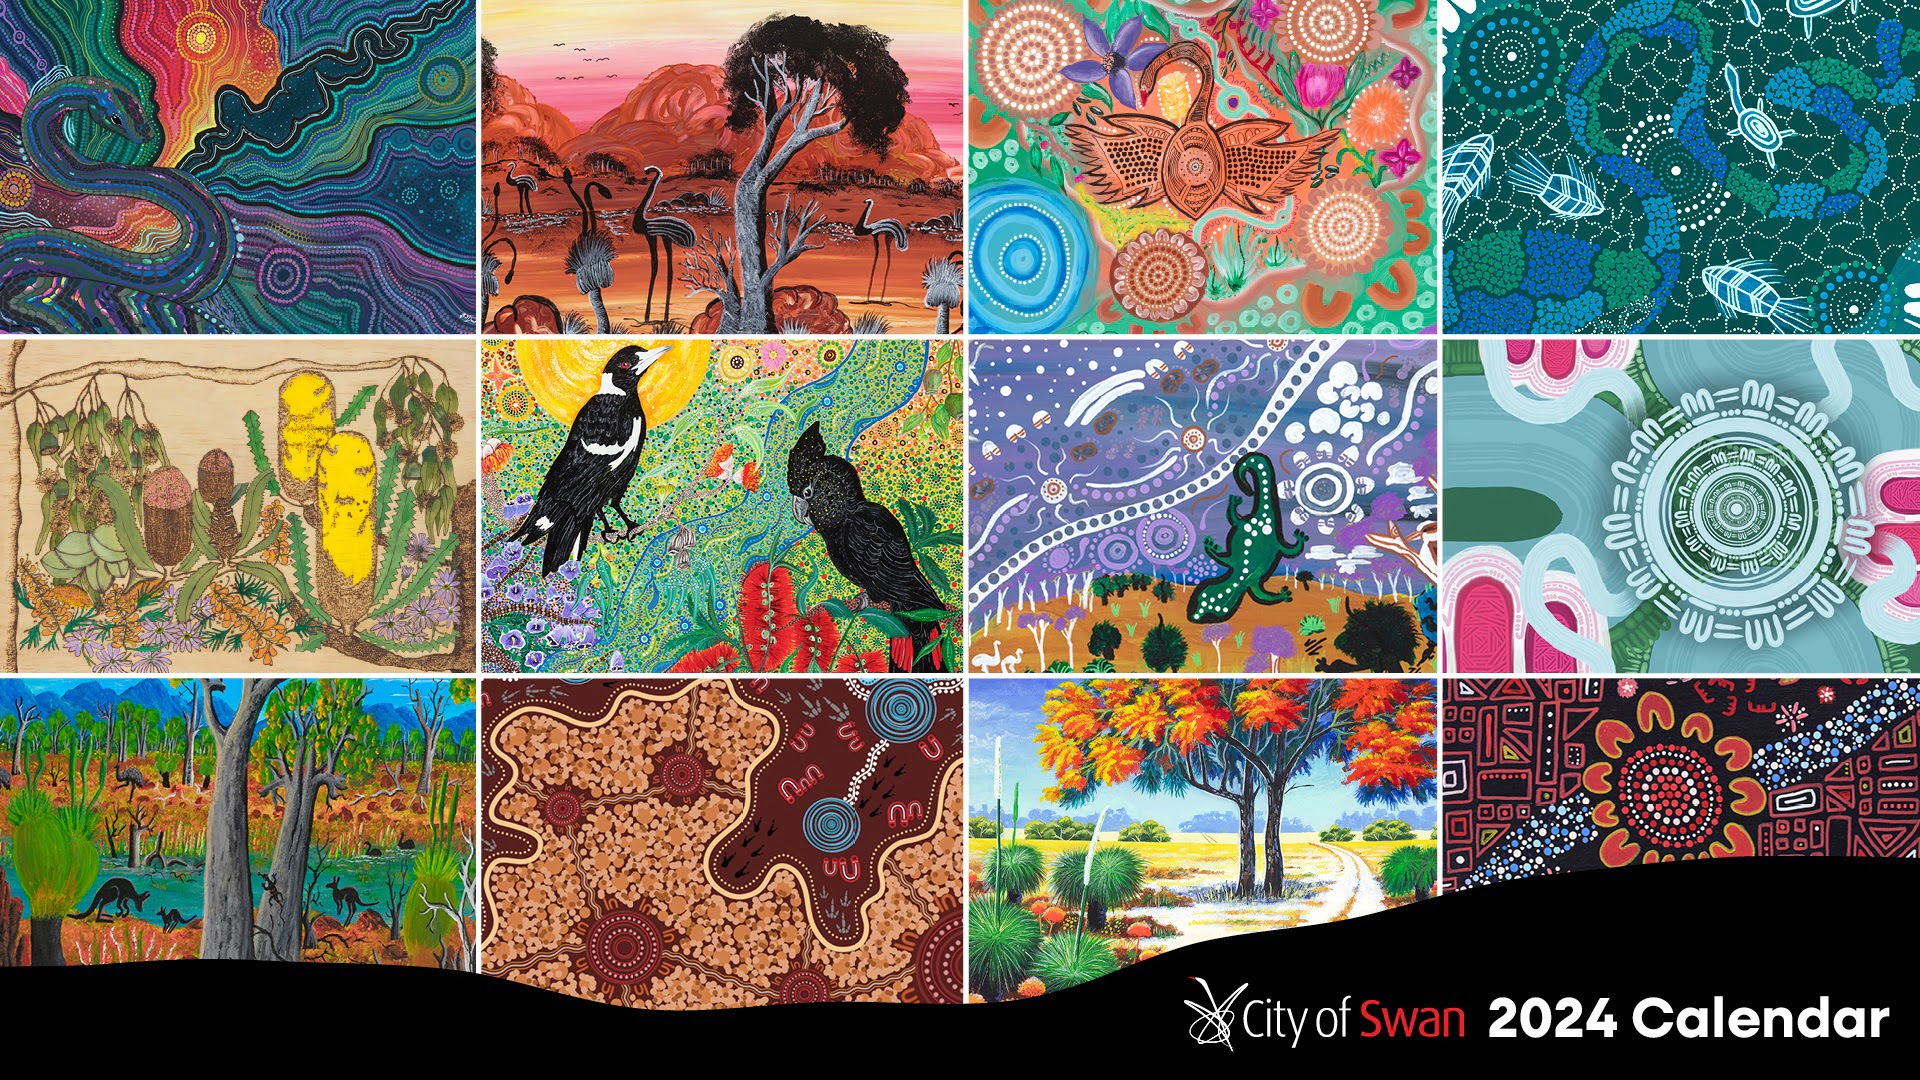 The City of Swan’s free 2024 Community Calendar features 12 original artworks.